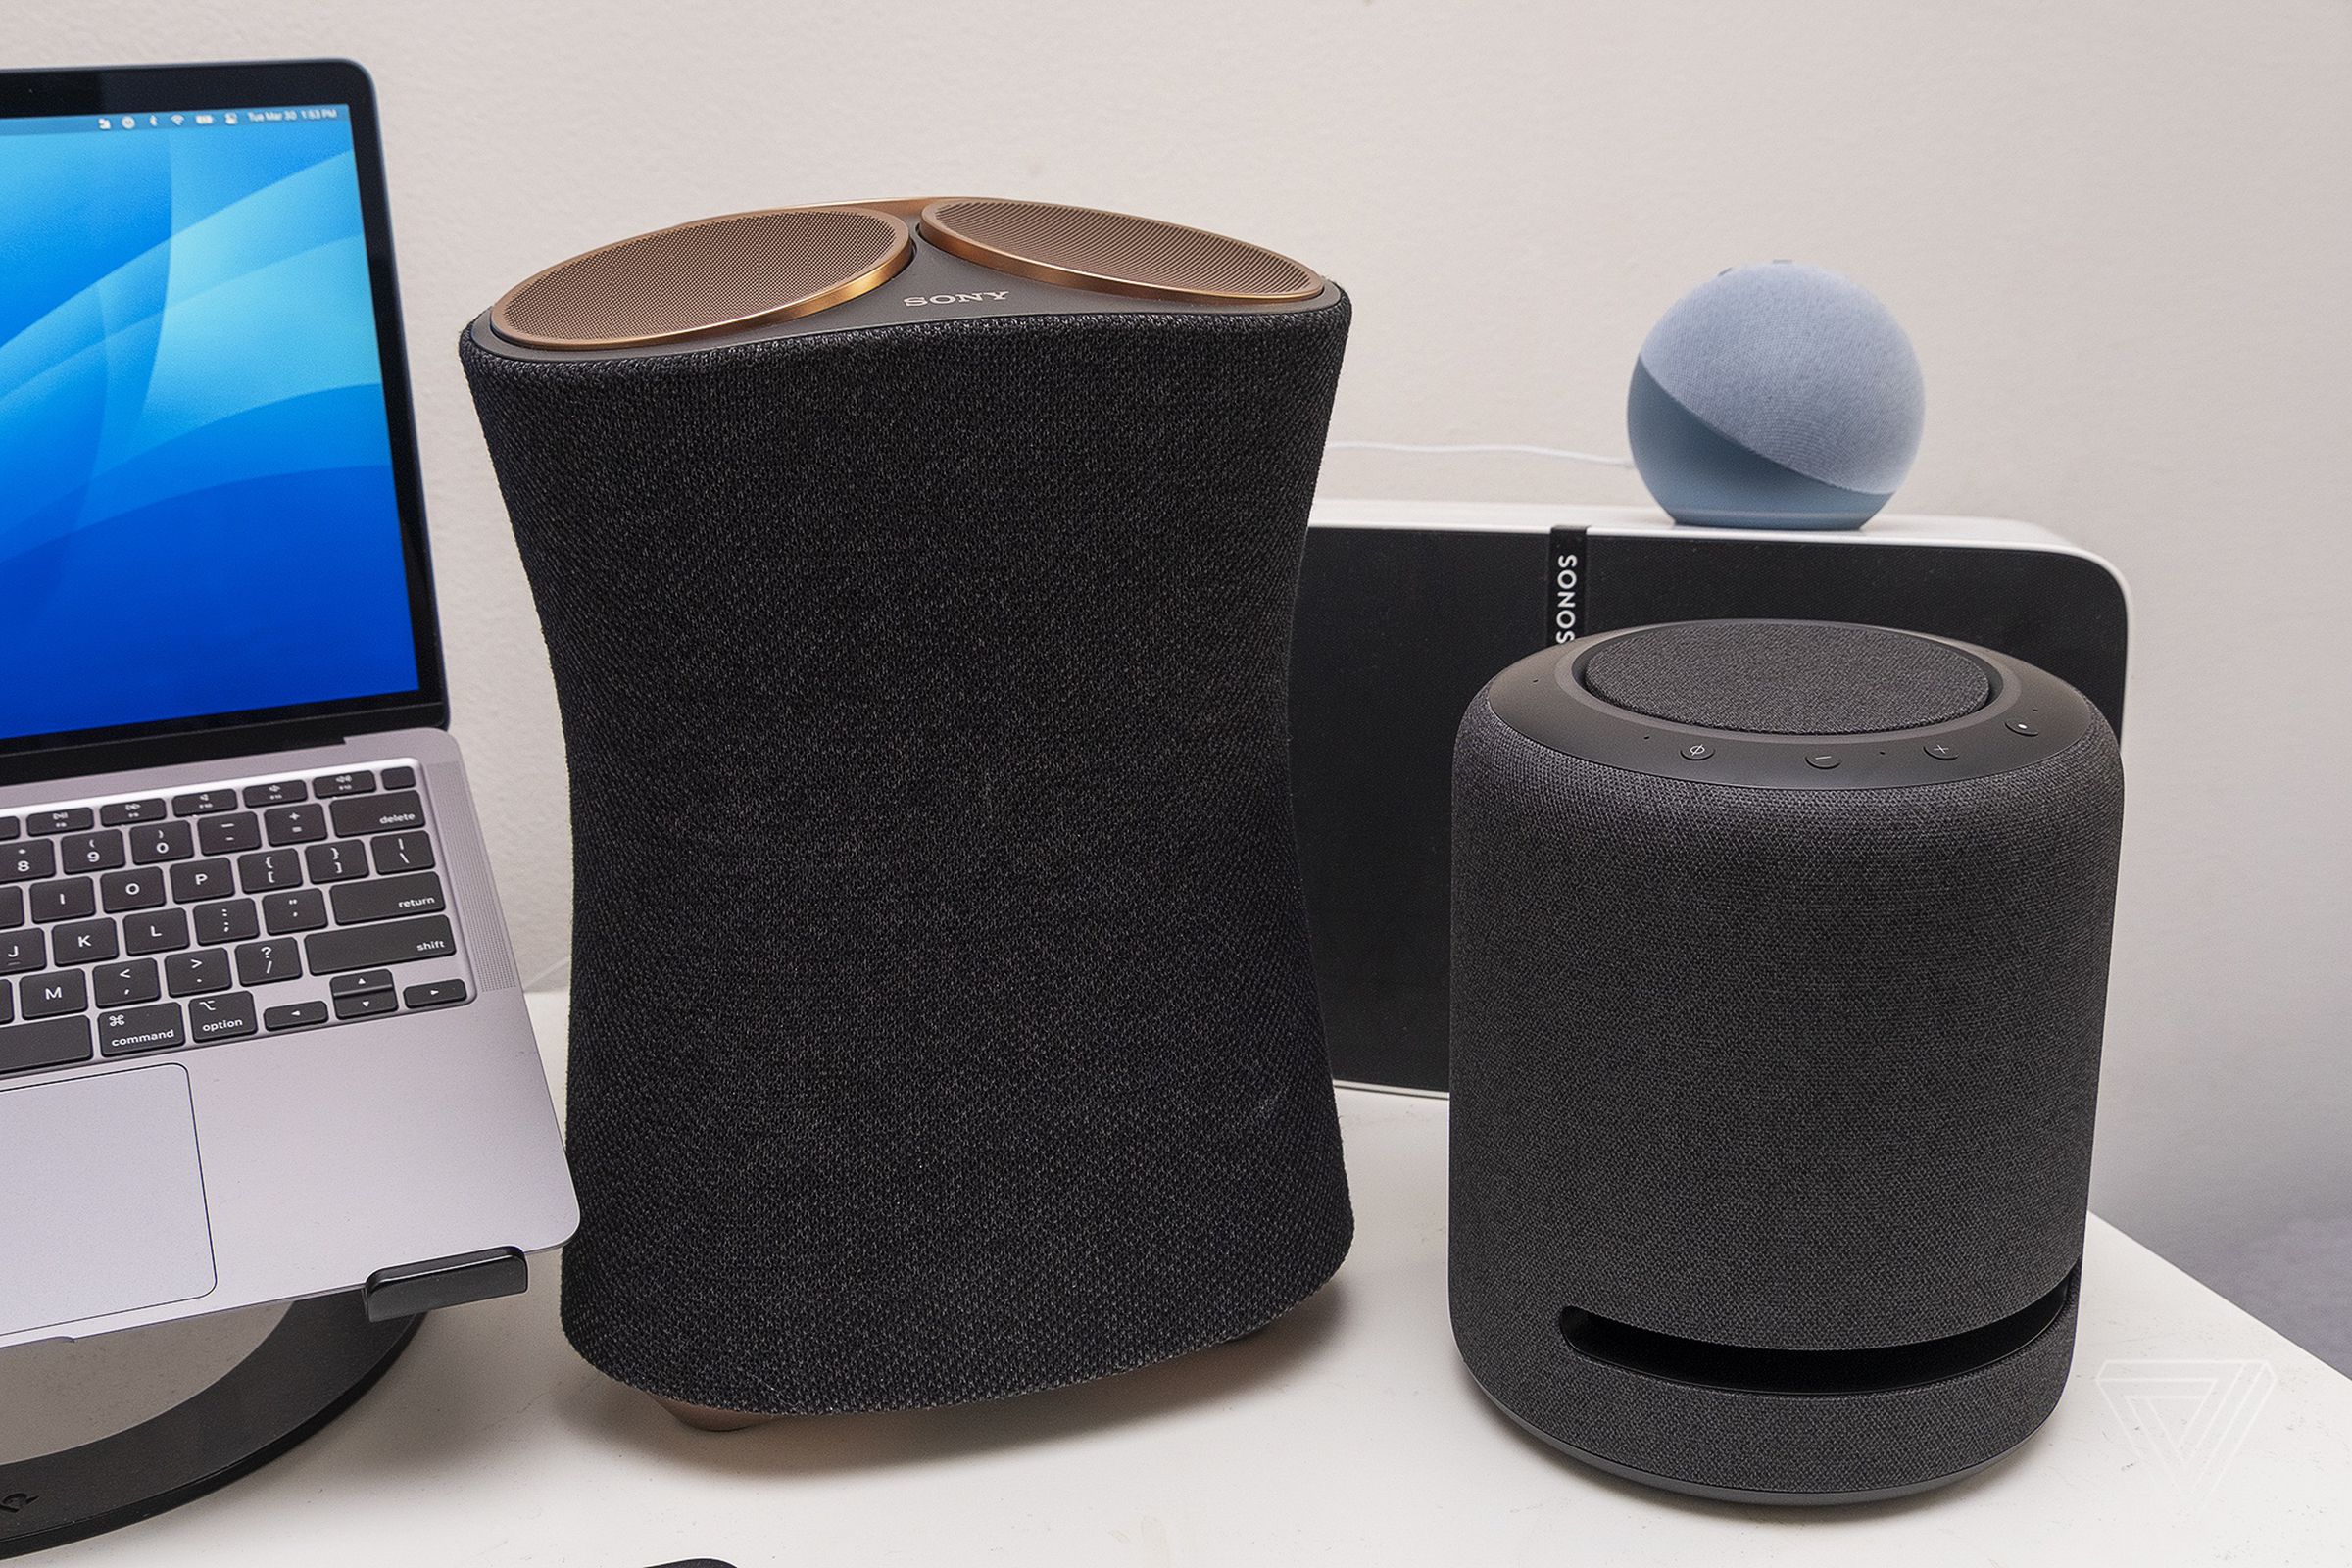 It dwarfs most other smart speakers.